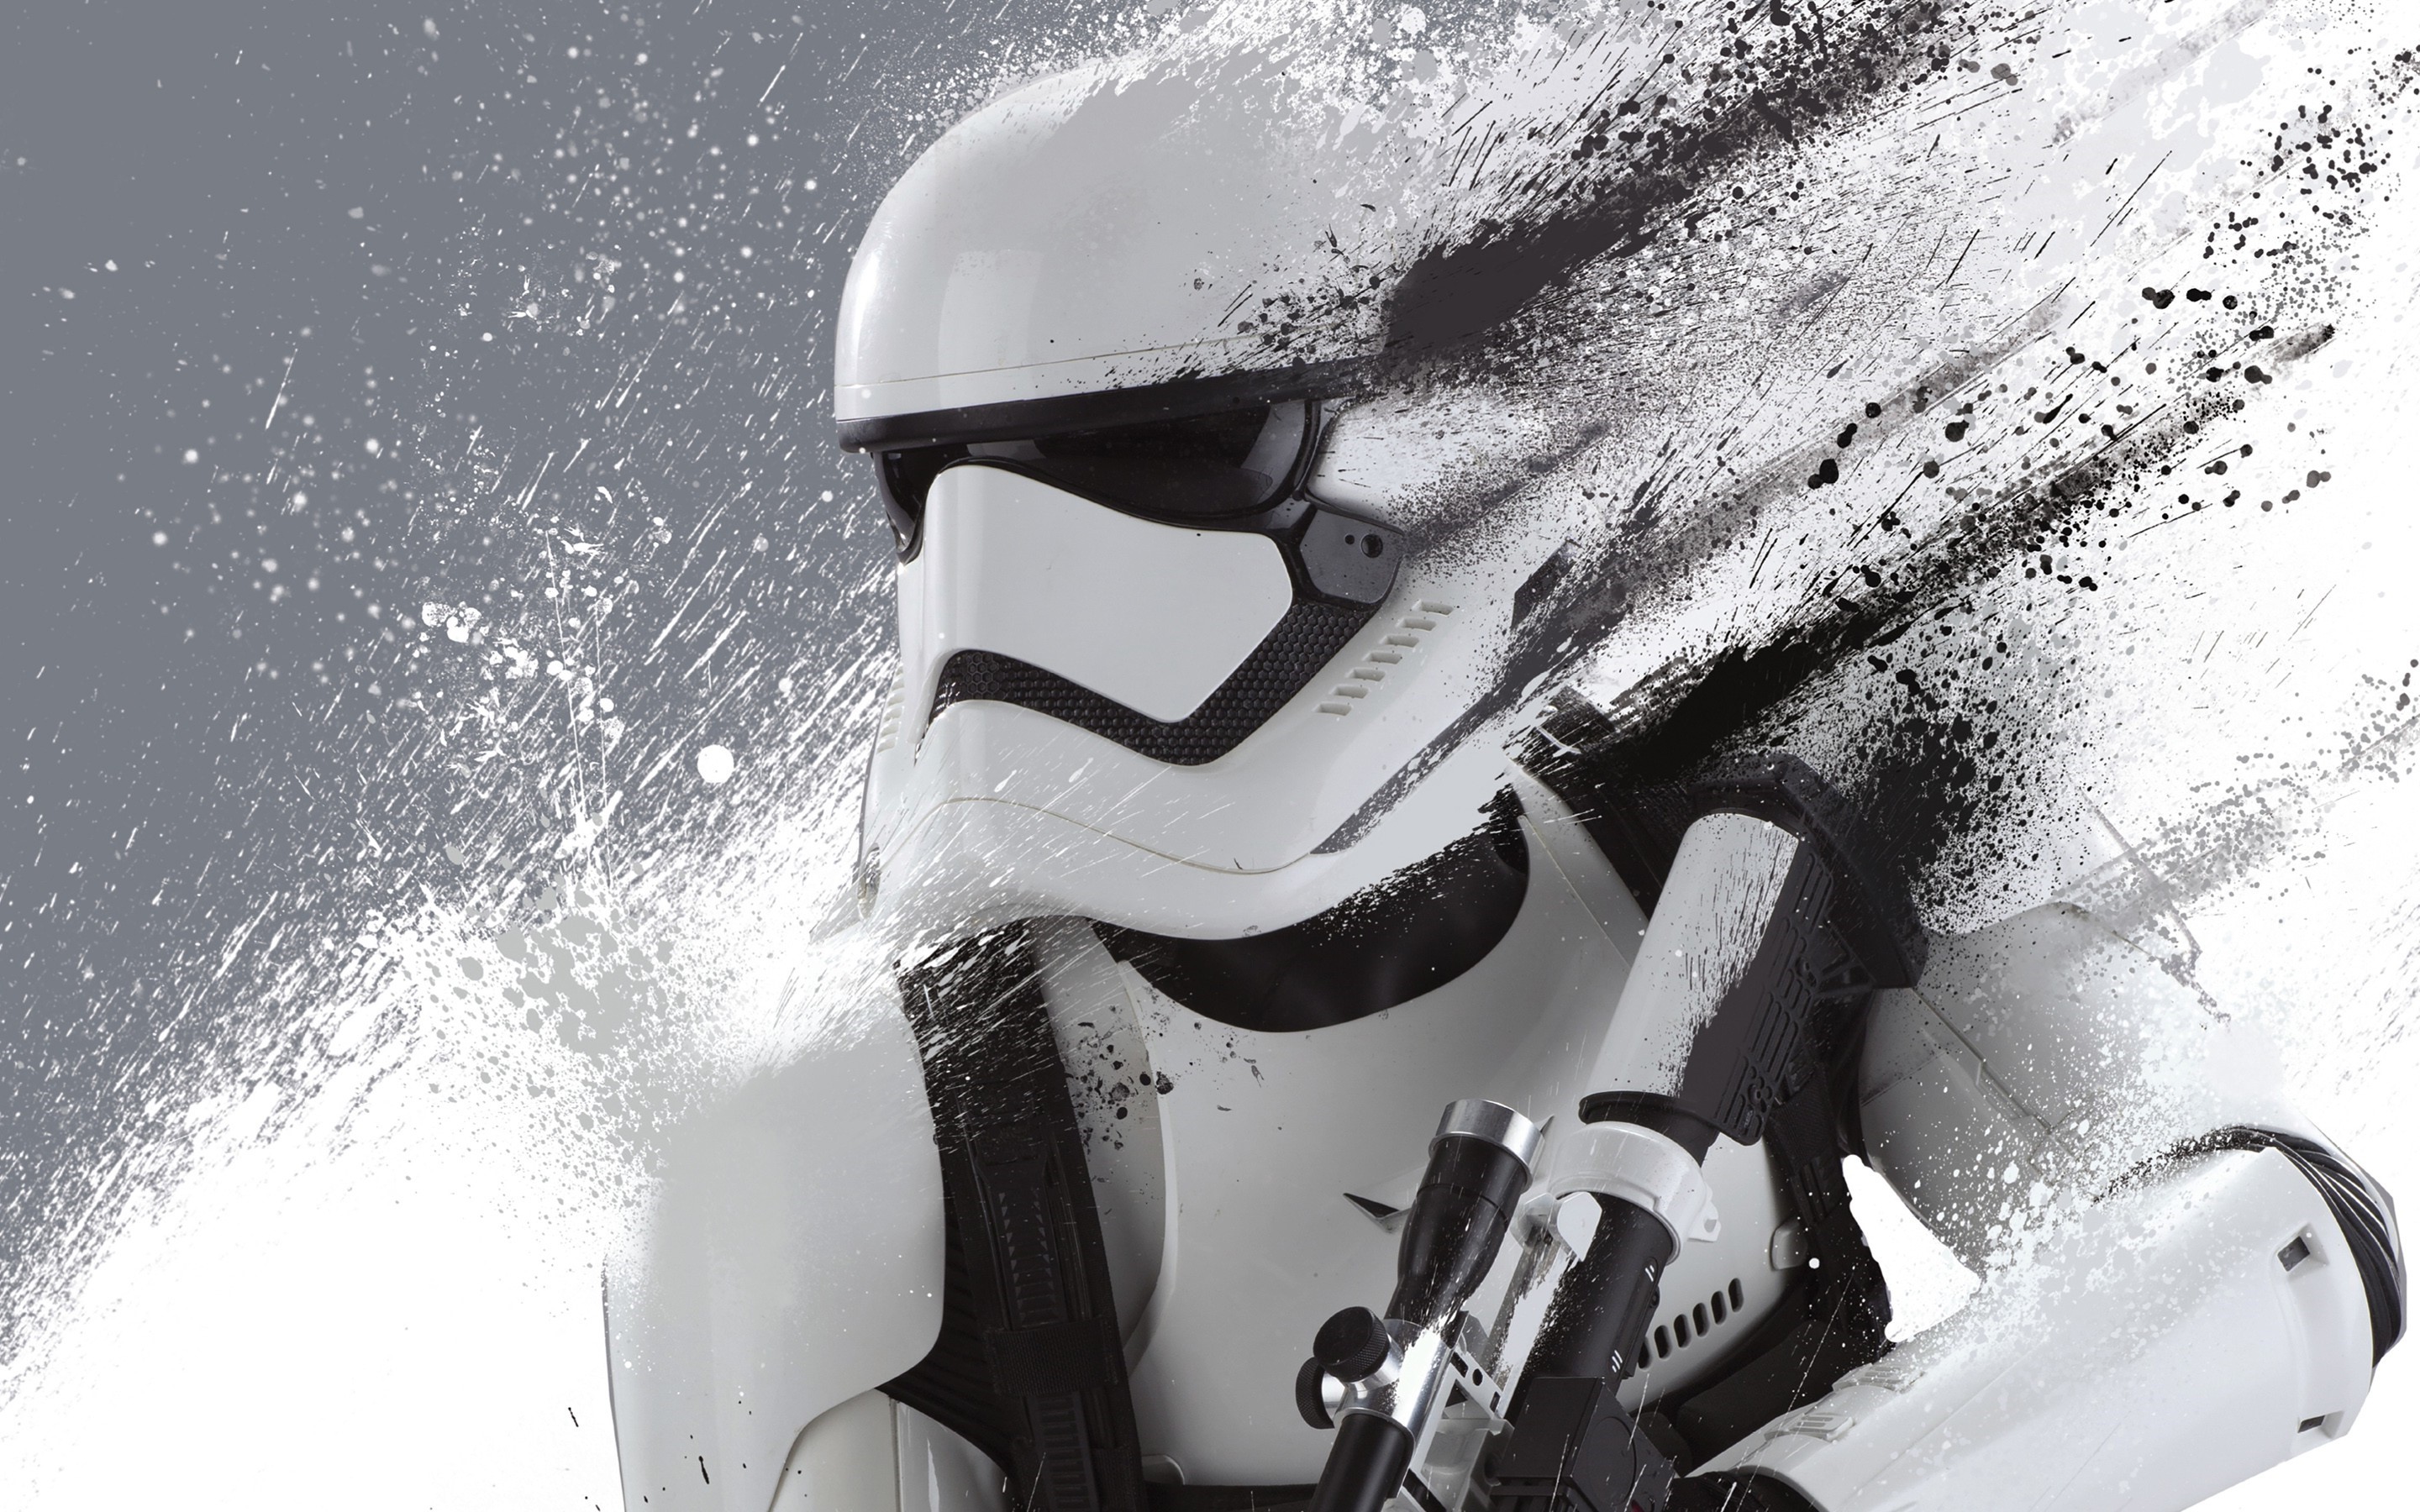 Download 4k Star Wars Rogue One Stormtroopers Wallpaper